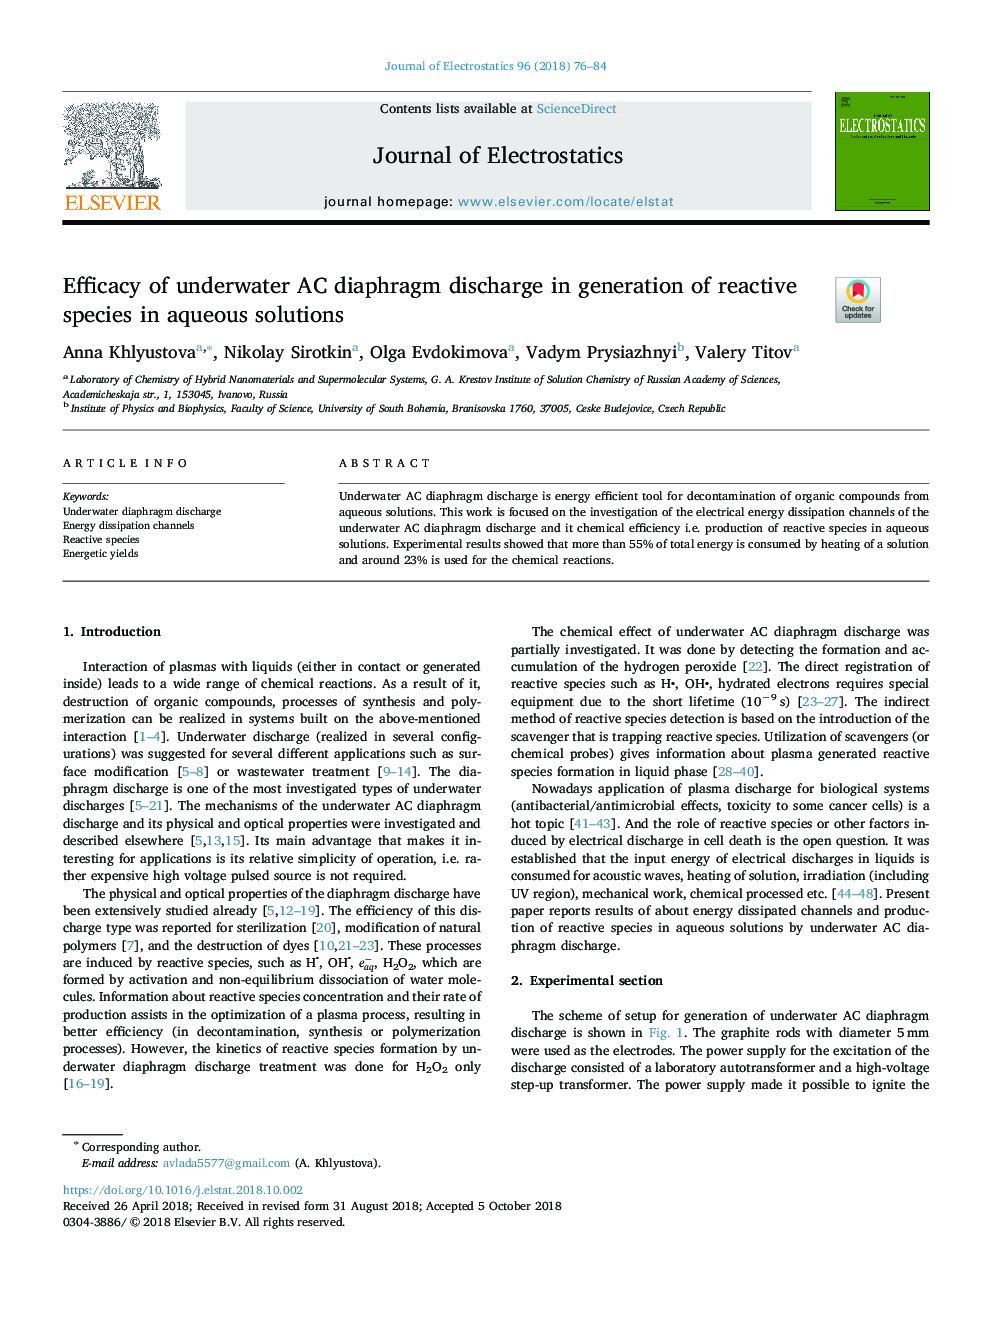 Efficacy of underwater AC diaphragm discharge in generation of reactive species in aqueous solutions